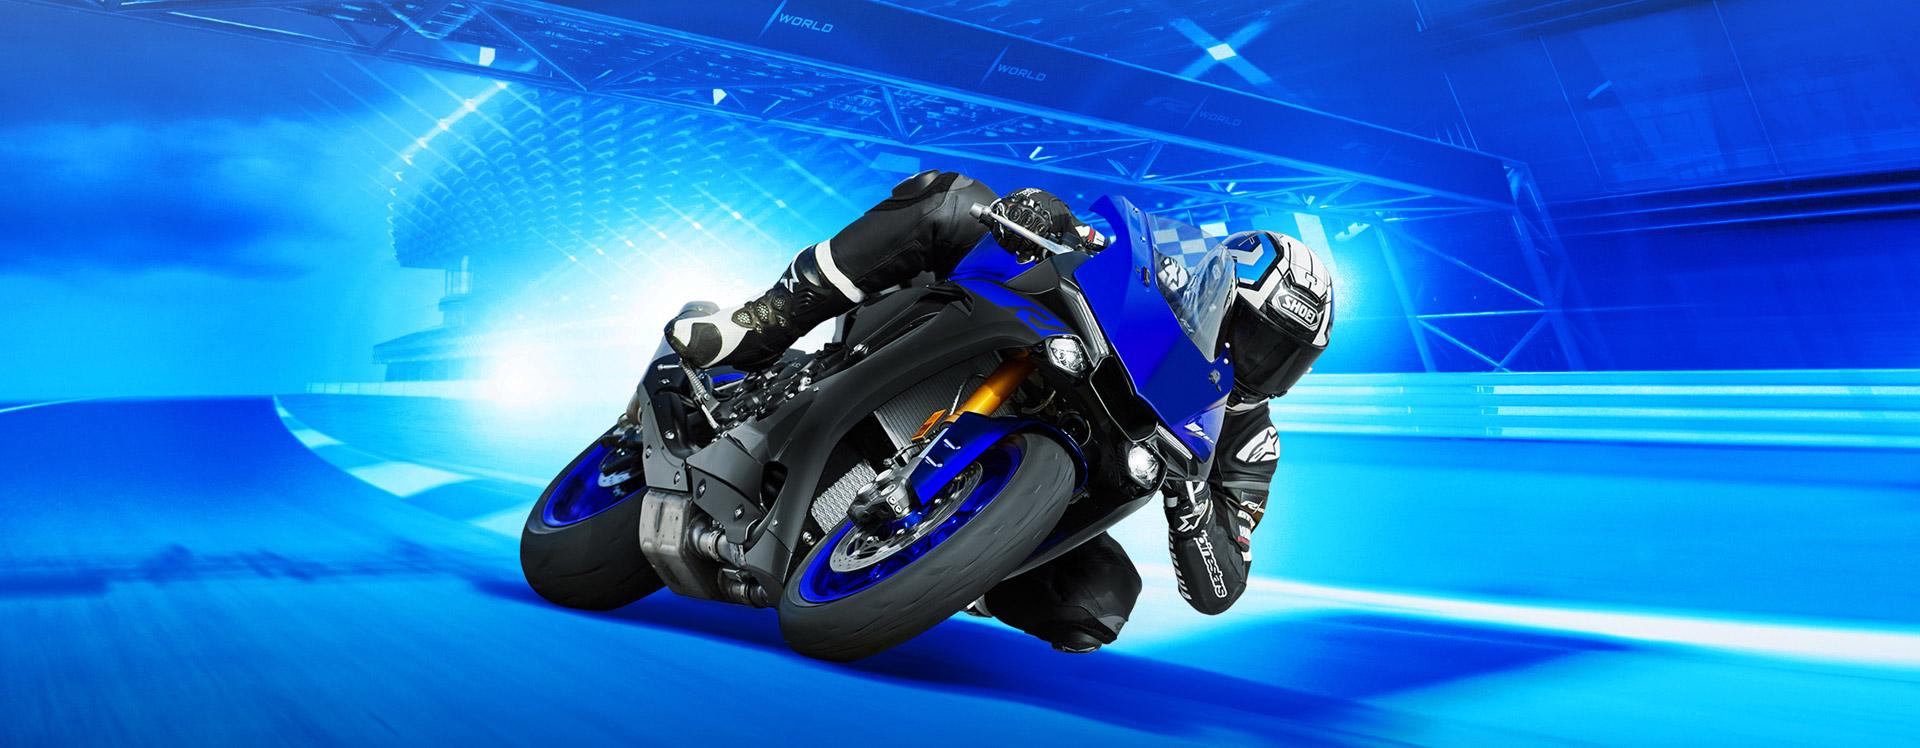 Yamaha YZF R1 Supersport Motorcycle